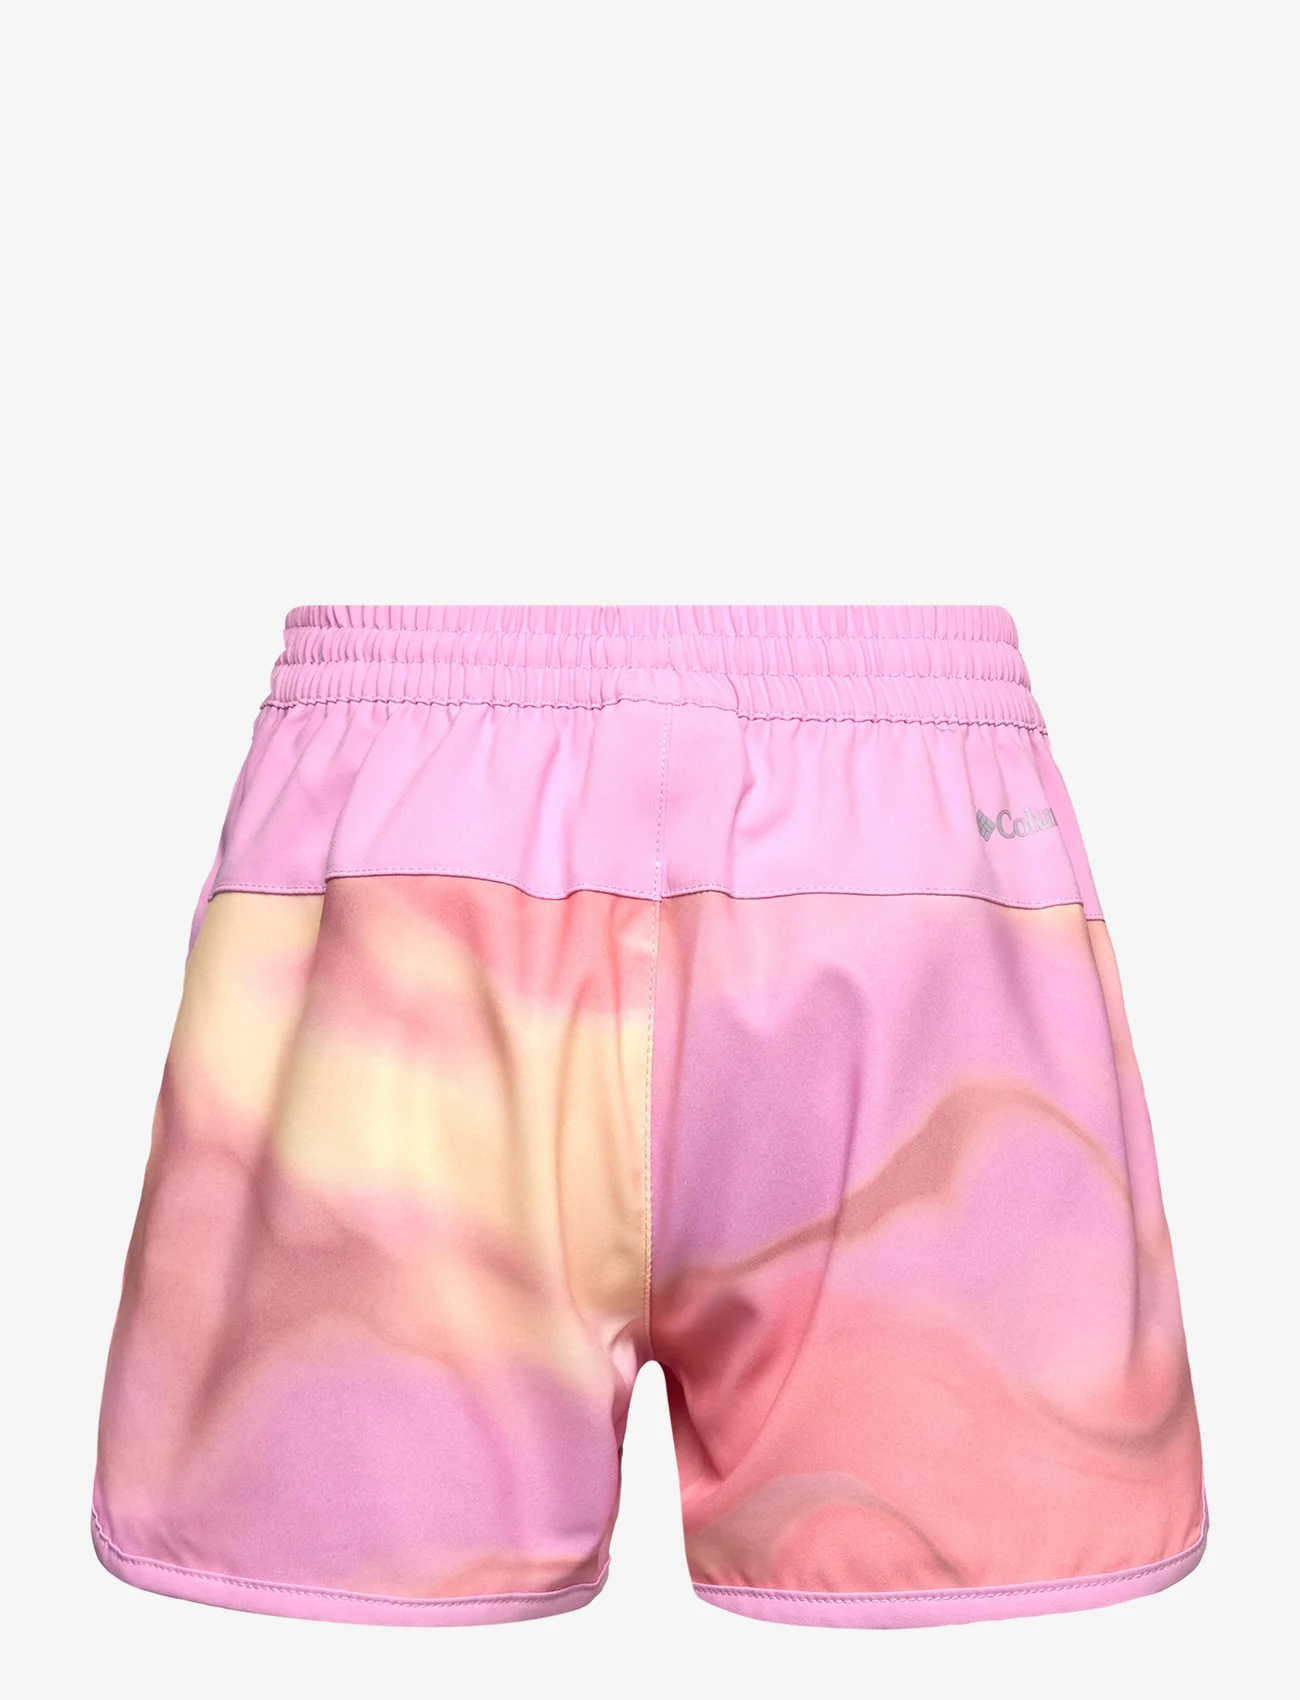 Columbia Sportswear - Sandy Shores Boardshort - sport shorts - salmon rose undercurrent - 1